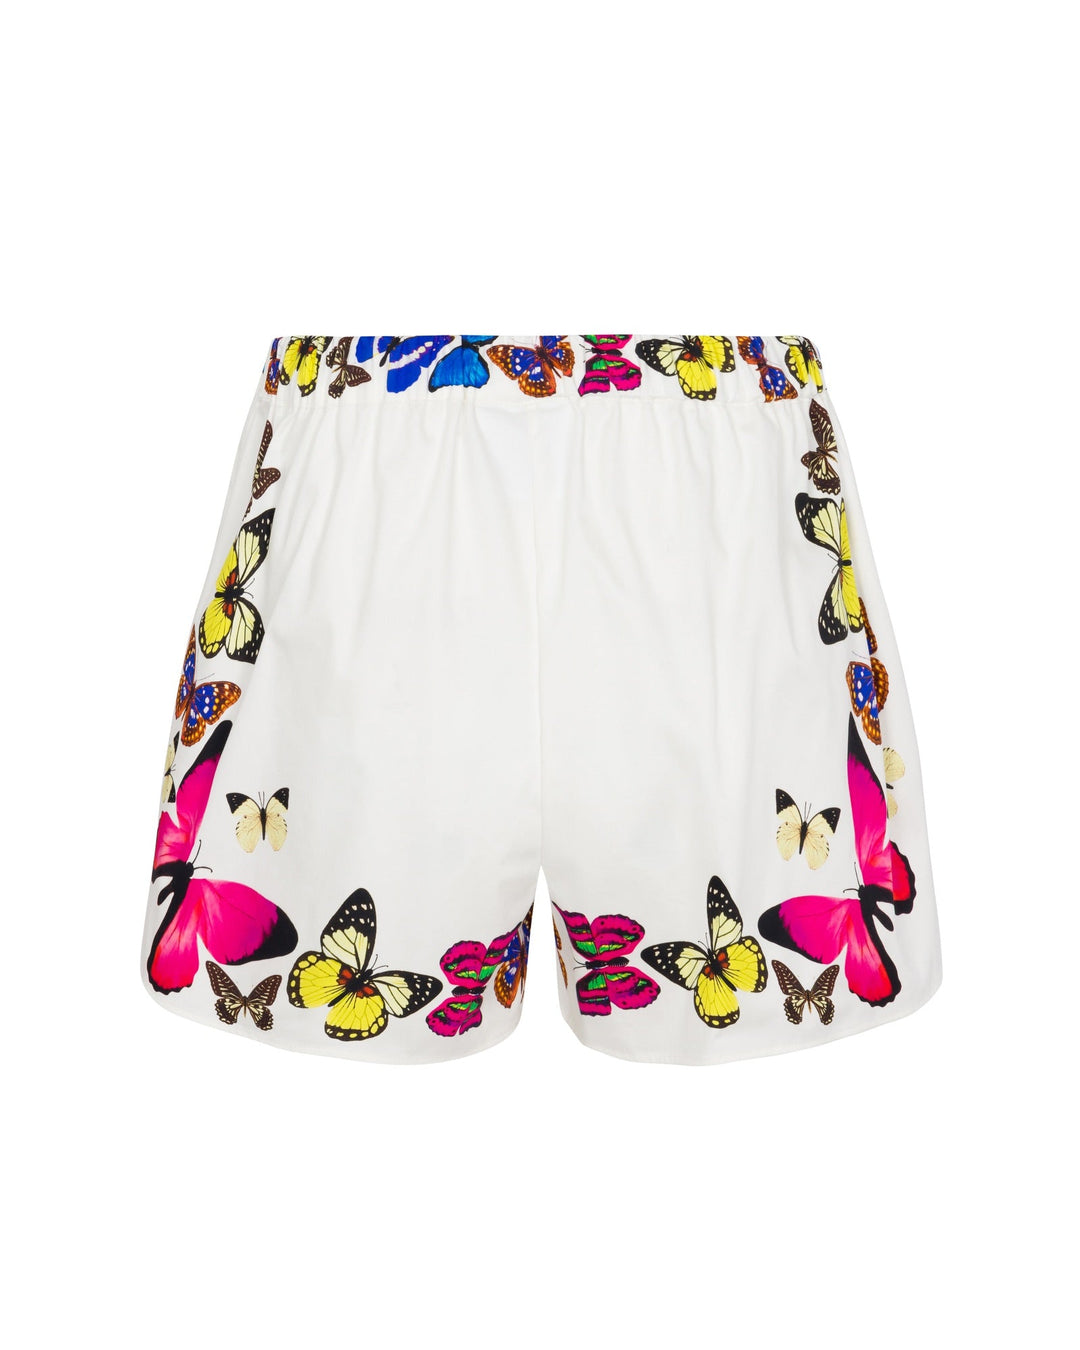 The Mariposa Shorts by Meghan Fabulous